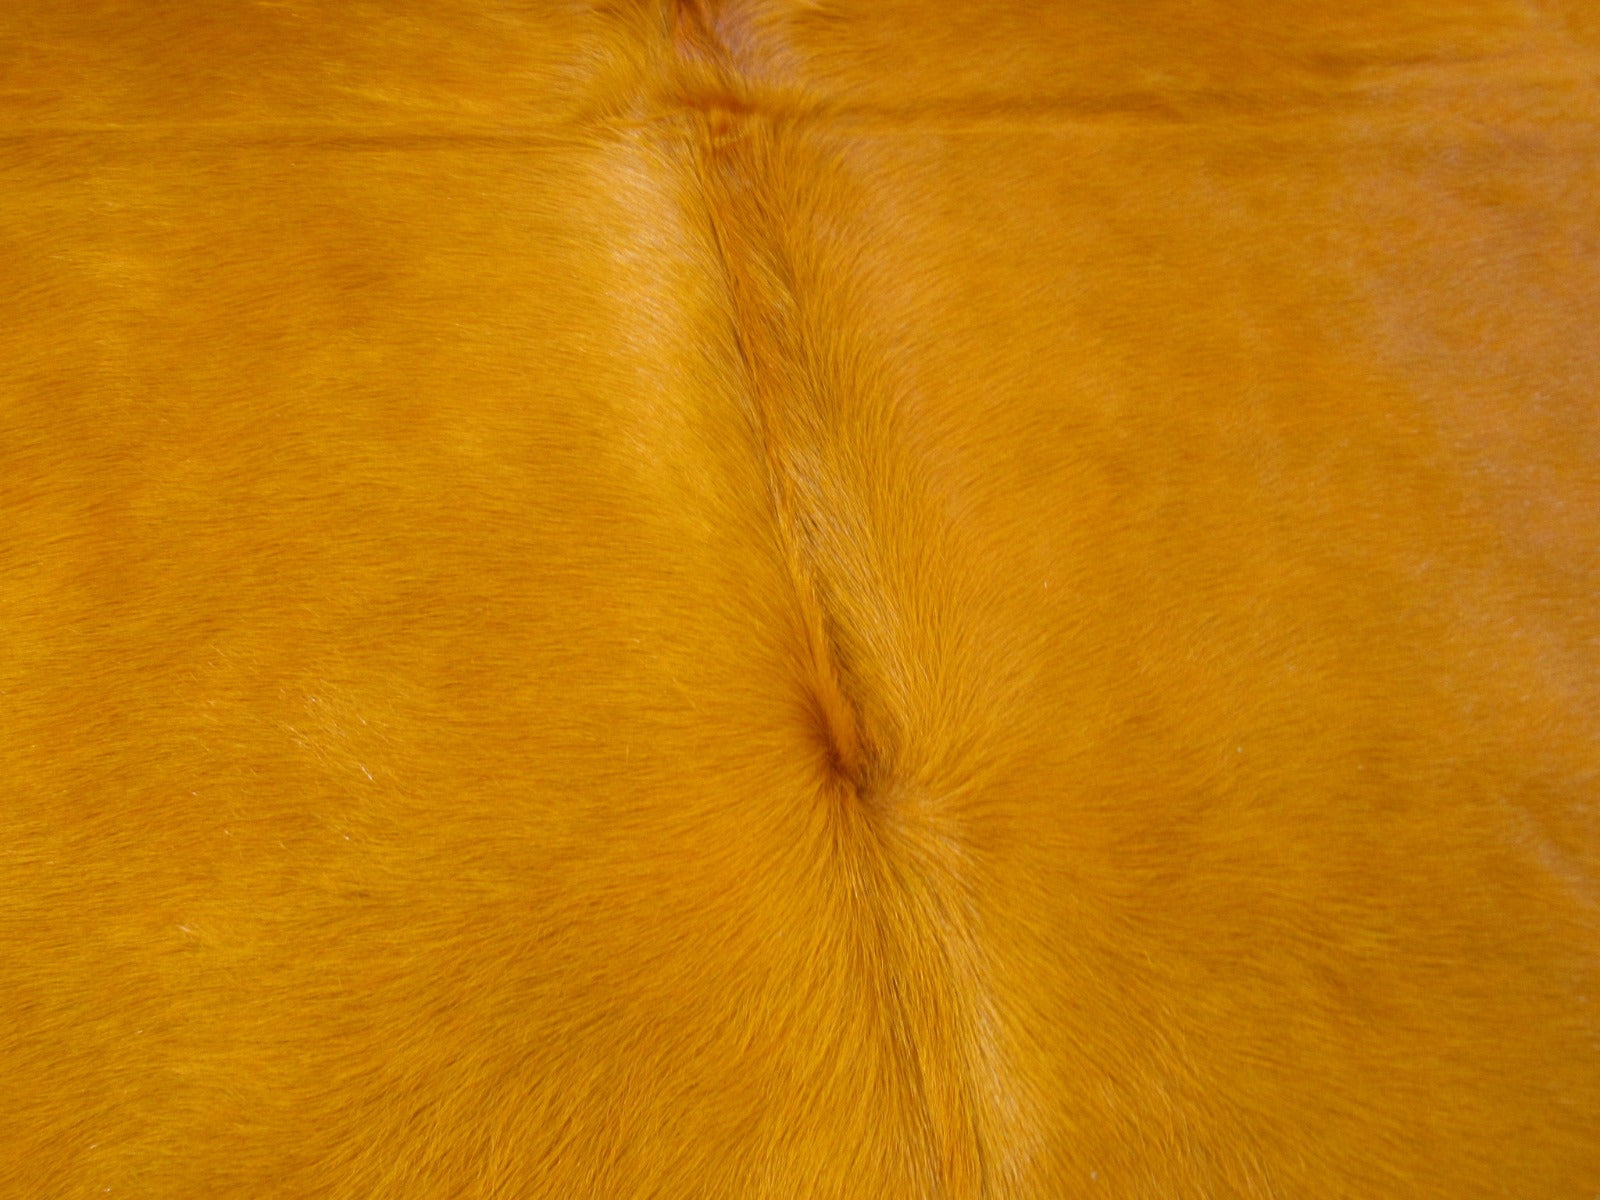 Dyed Orange Cowhide Rug - Size: 7x6 feet C-1747